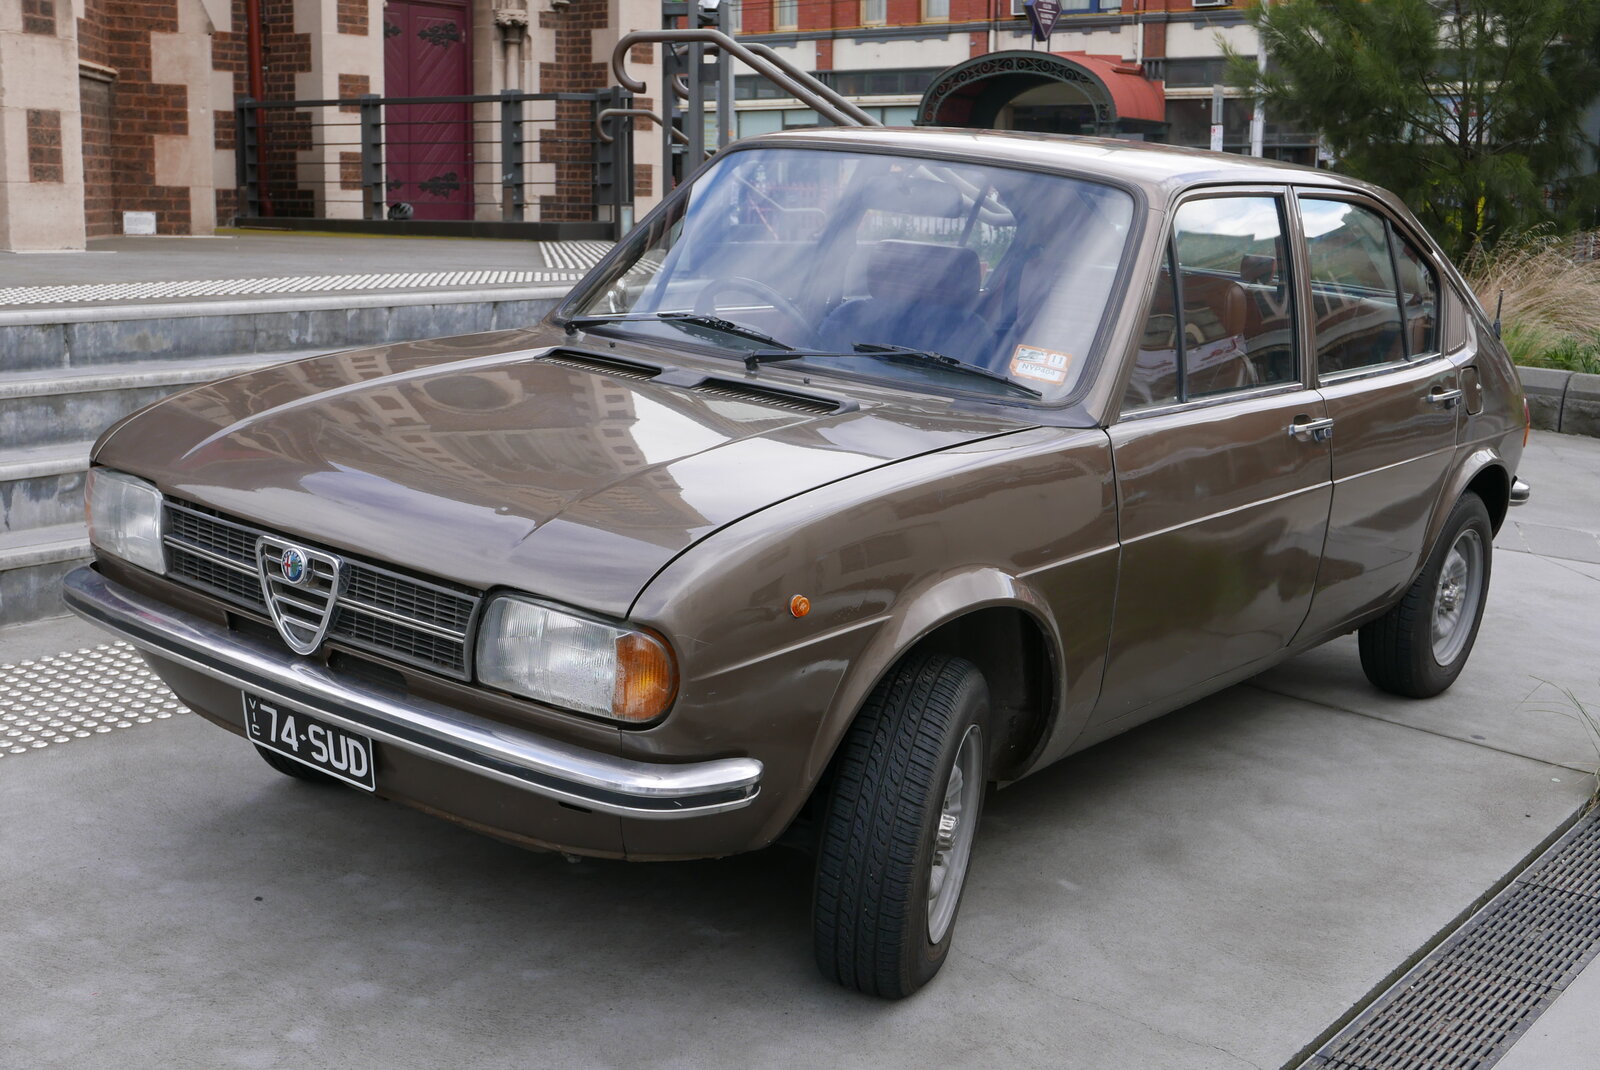 1974_Alfa_Romeo_Alfasud_4-door_sedan_(2015-07-15)_01.jpg